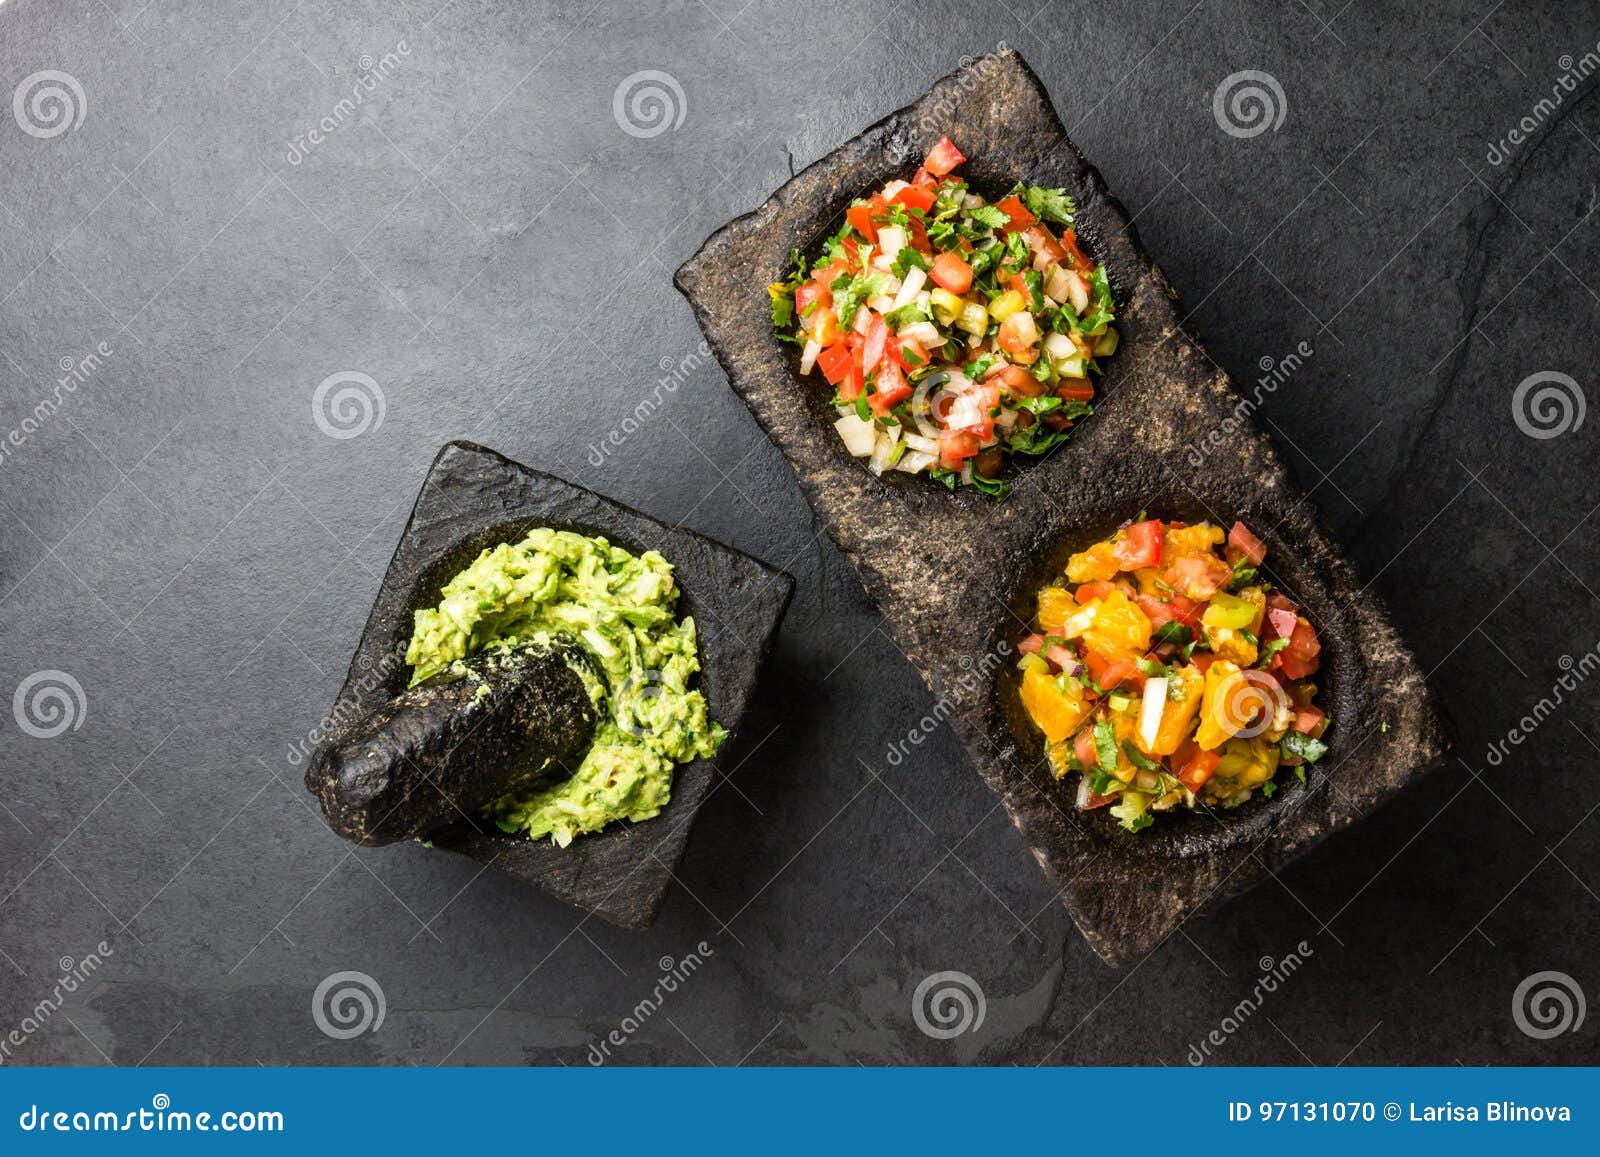 famous mexican sauces salsas - pico de gallo, avocado guacamole, salsa bandera mexicana in stone mortars on gray slate background